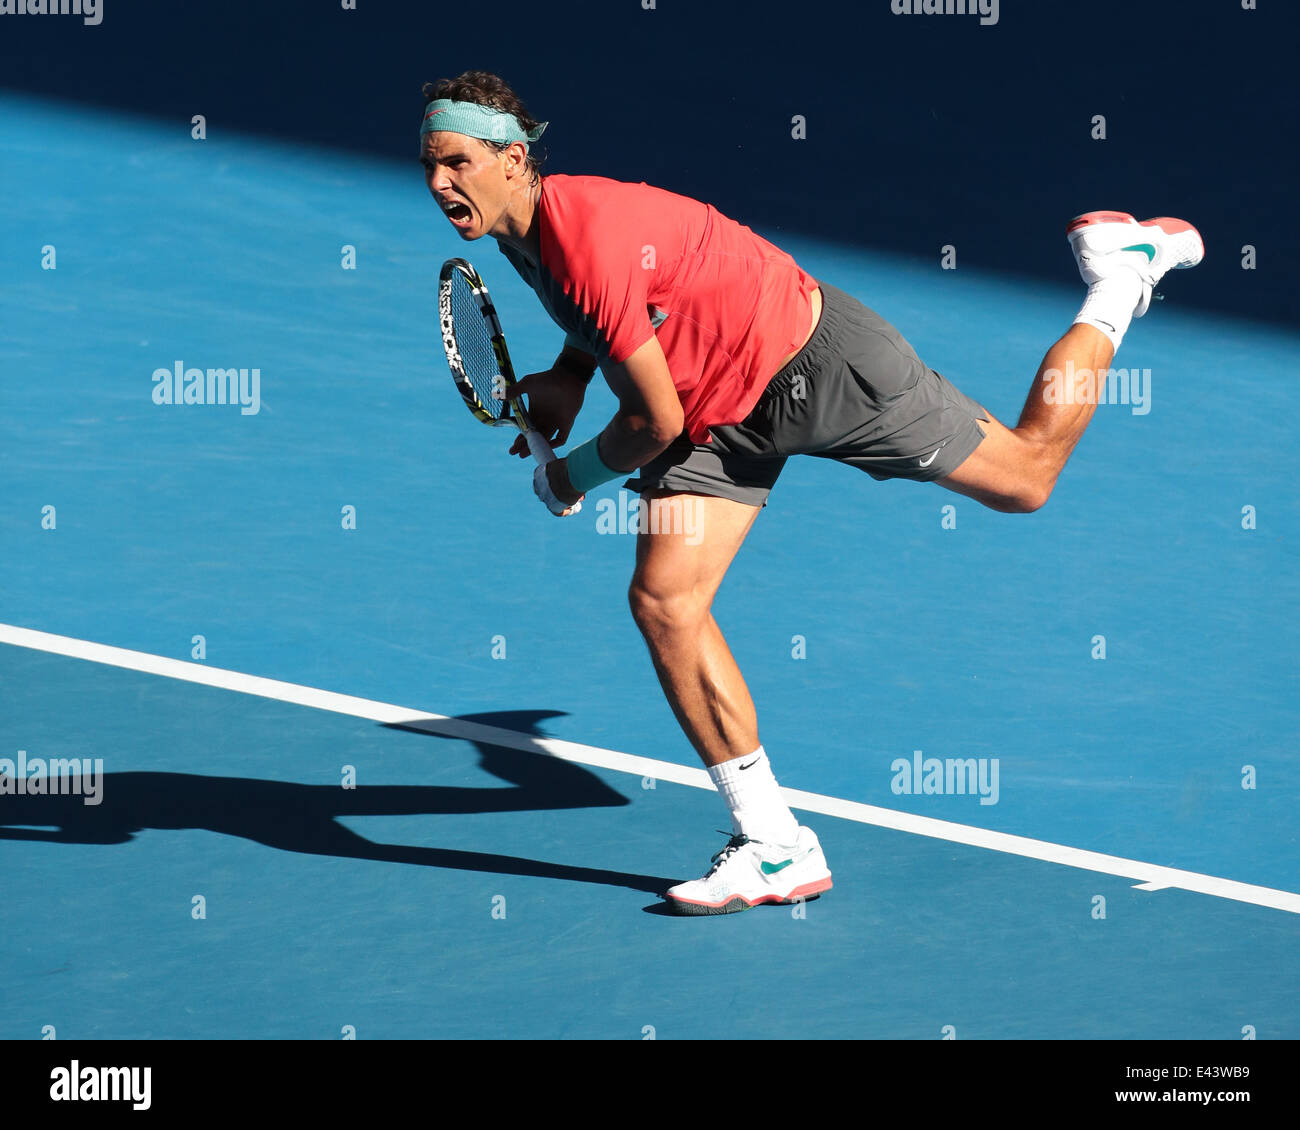 Tennis - Australian Open 2014 Melbourne - Rafael Nadal vs. Grigor Dimitrov  - Rod Laver Arena Featuring: Rafael Nadal Where: Melbourne, Australia When:  22 Jan 2014 Stock Photo - Alamy